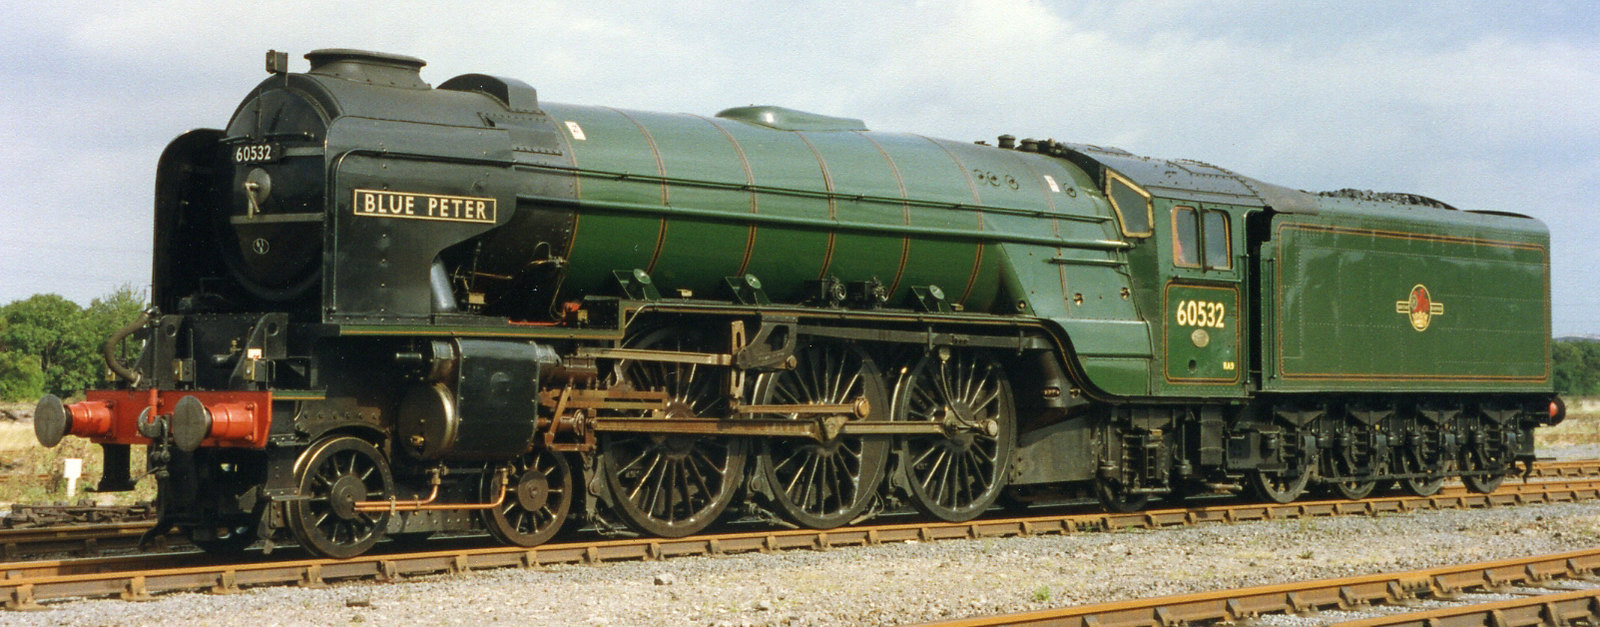 Blue Peter Train Model